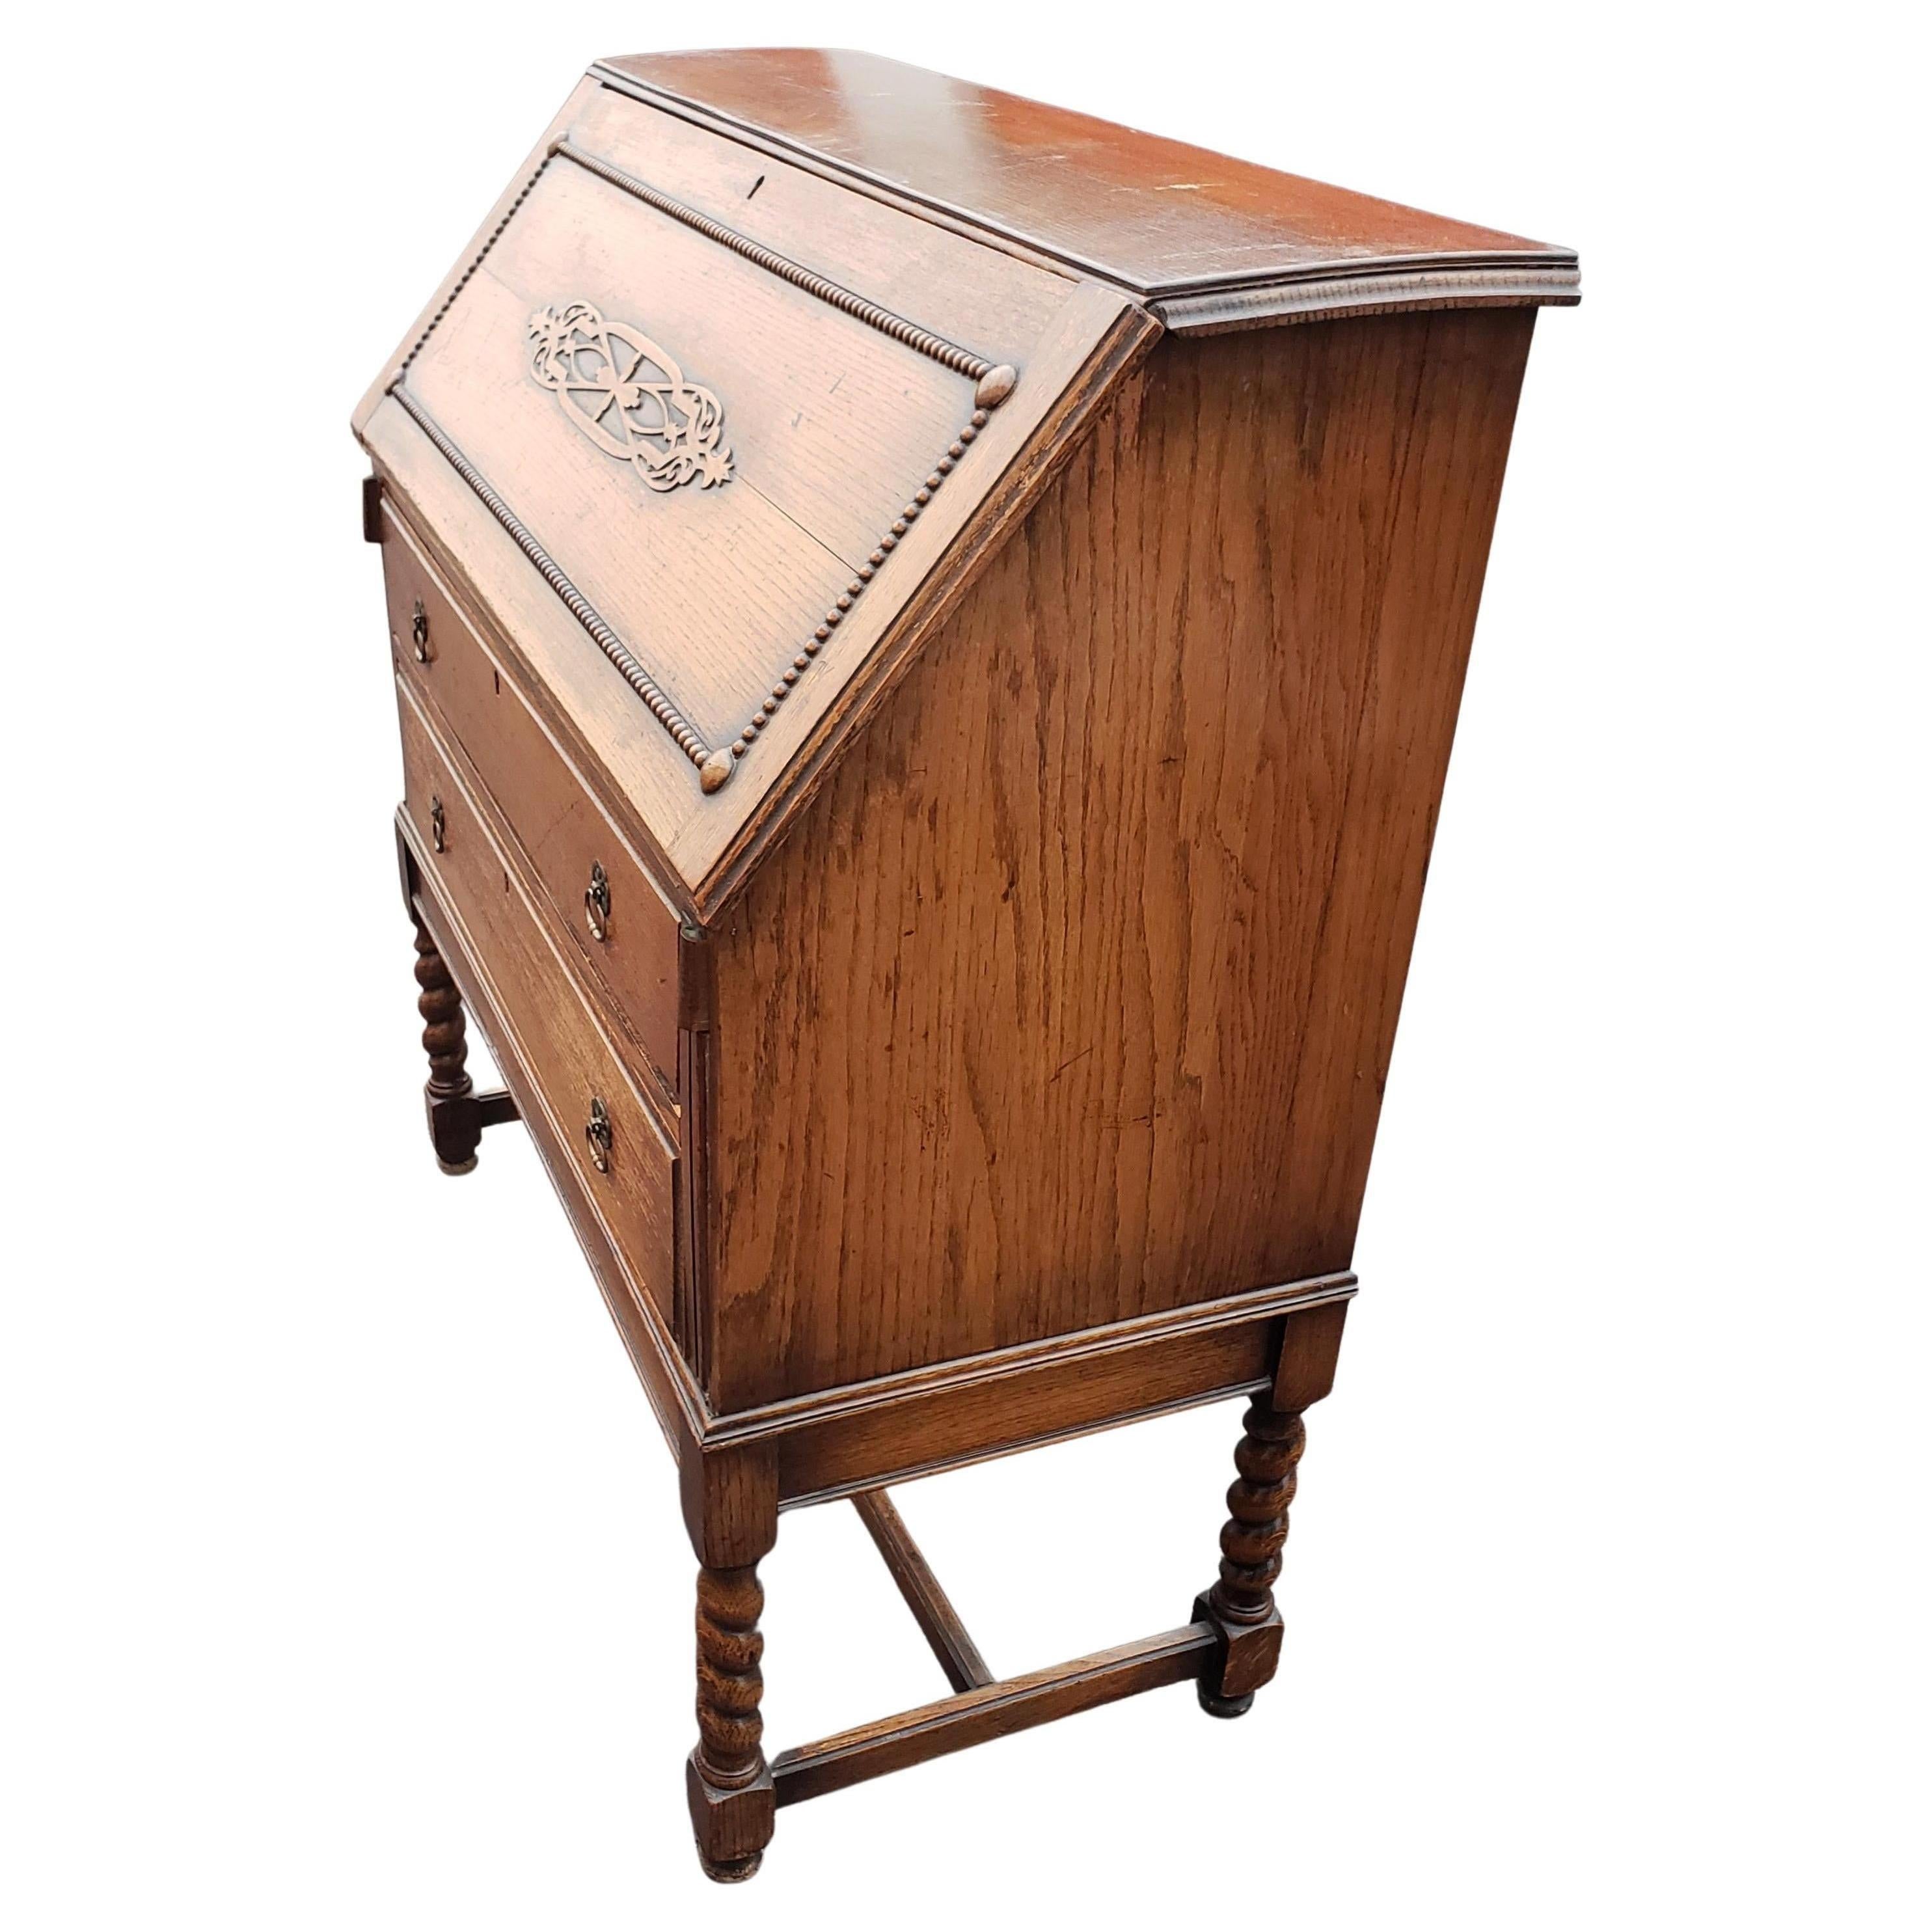 Hand-Crafted Antique Barley Twist Jacobean Desk Secretary Drop Front Oak Bureau, circa 1890s